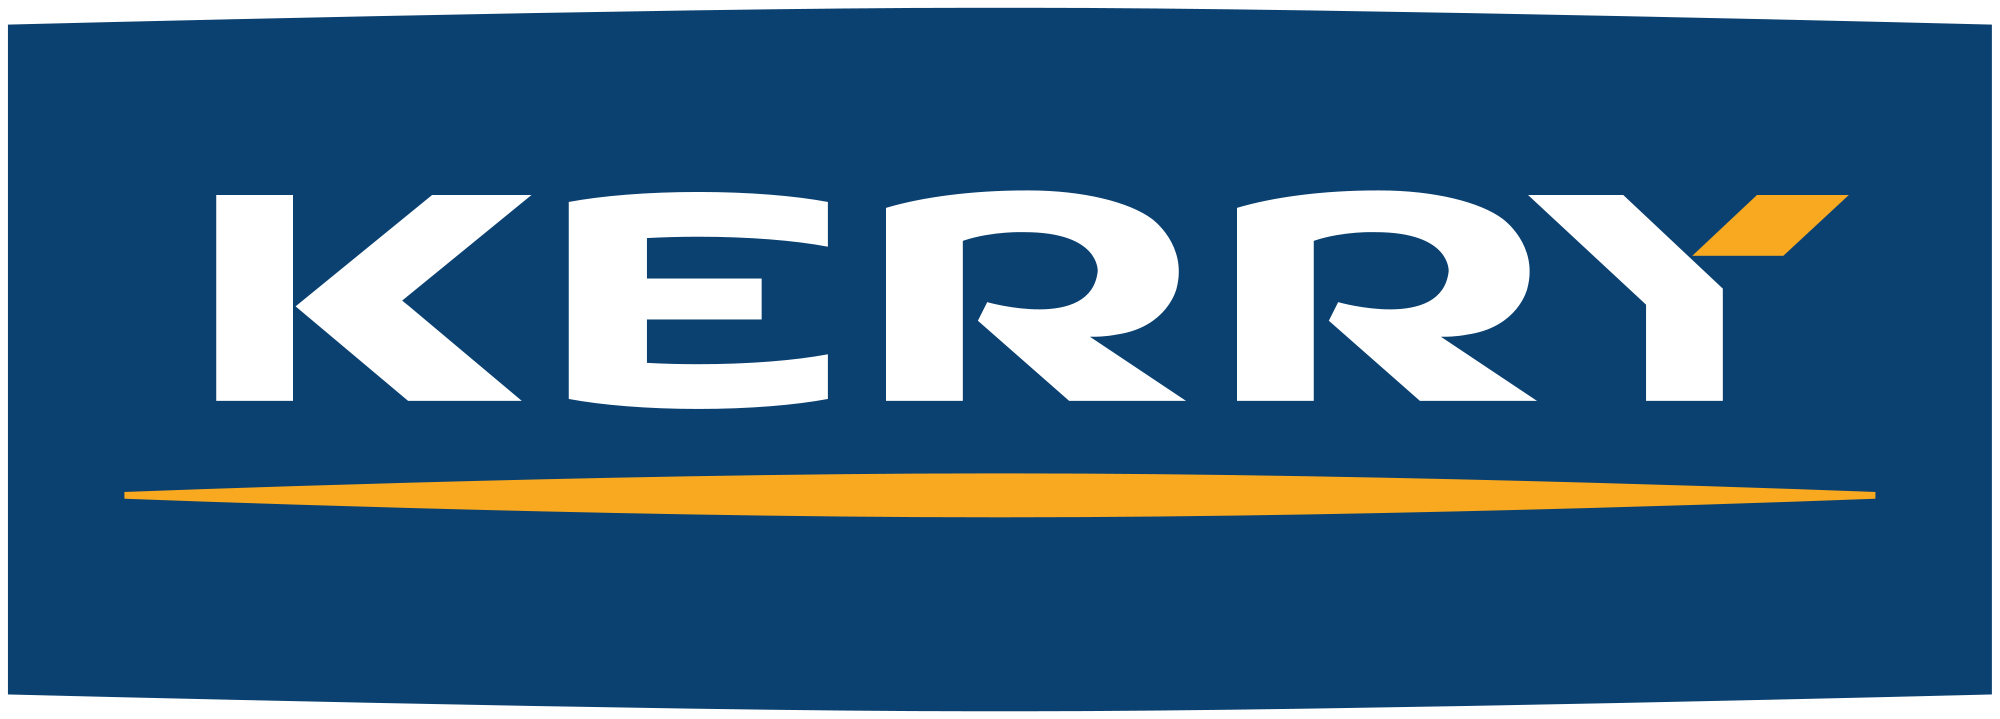 Enoten Logo - About Event Zero | Event Zero